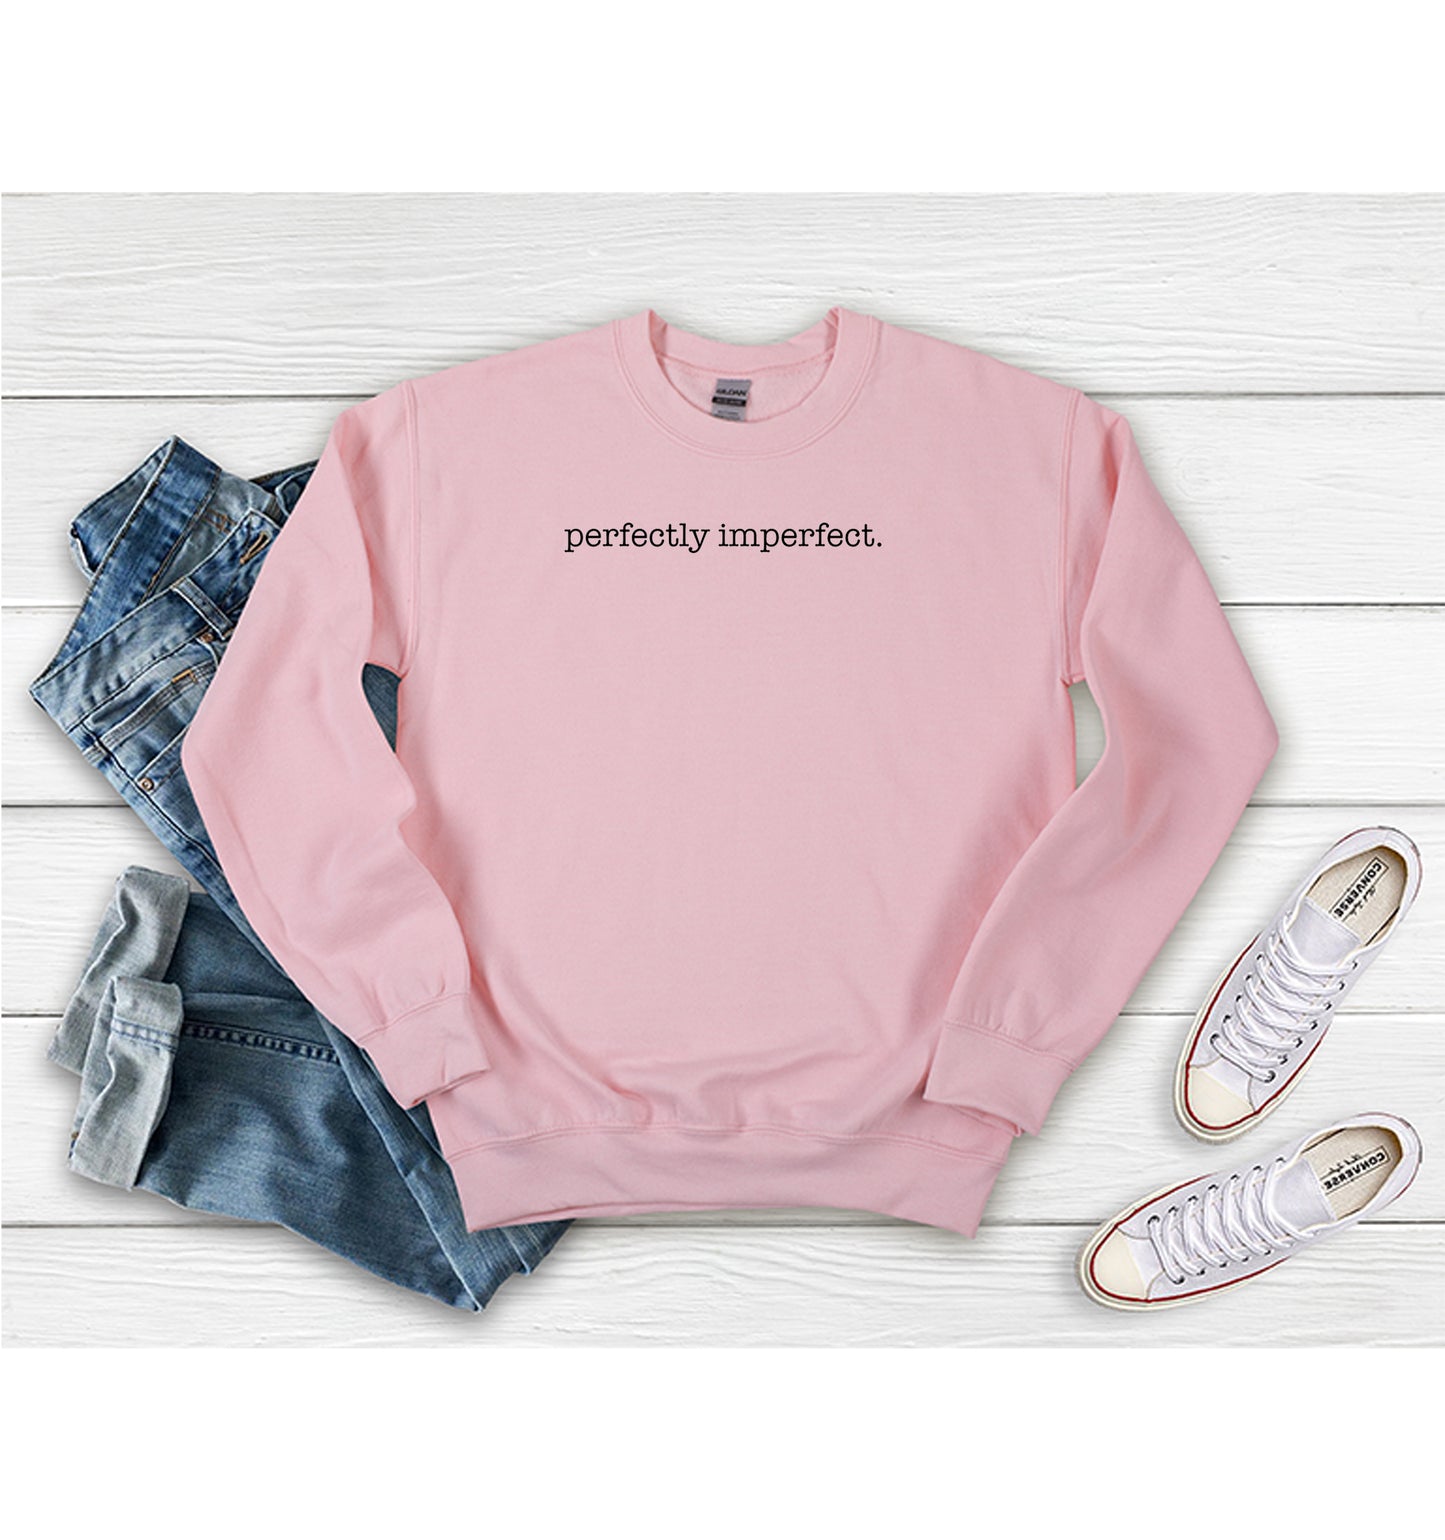 perfectly imperfect - Affirmation Shirt - Sweatshirt